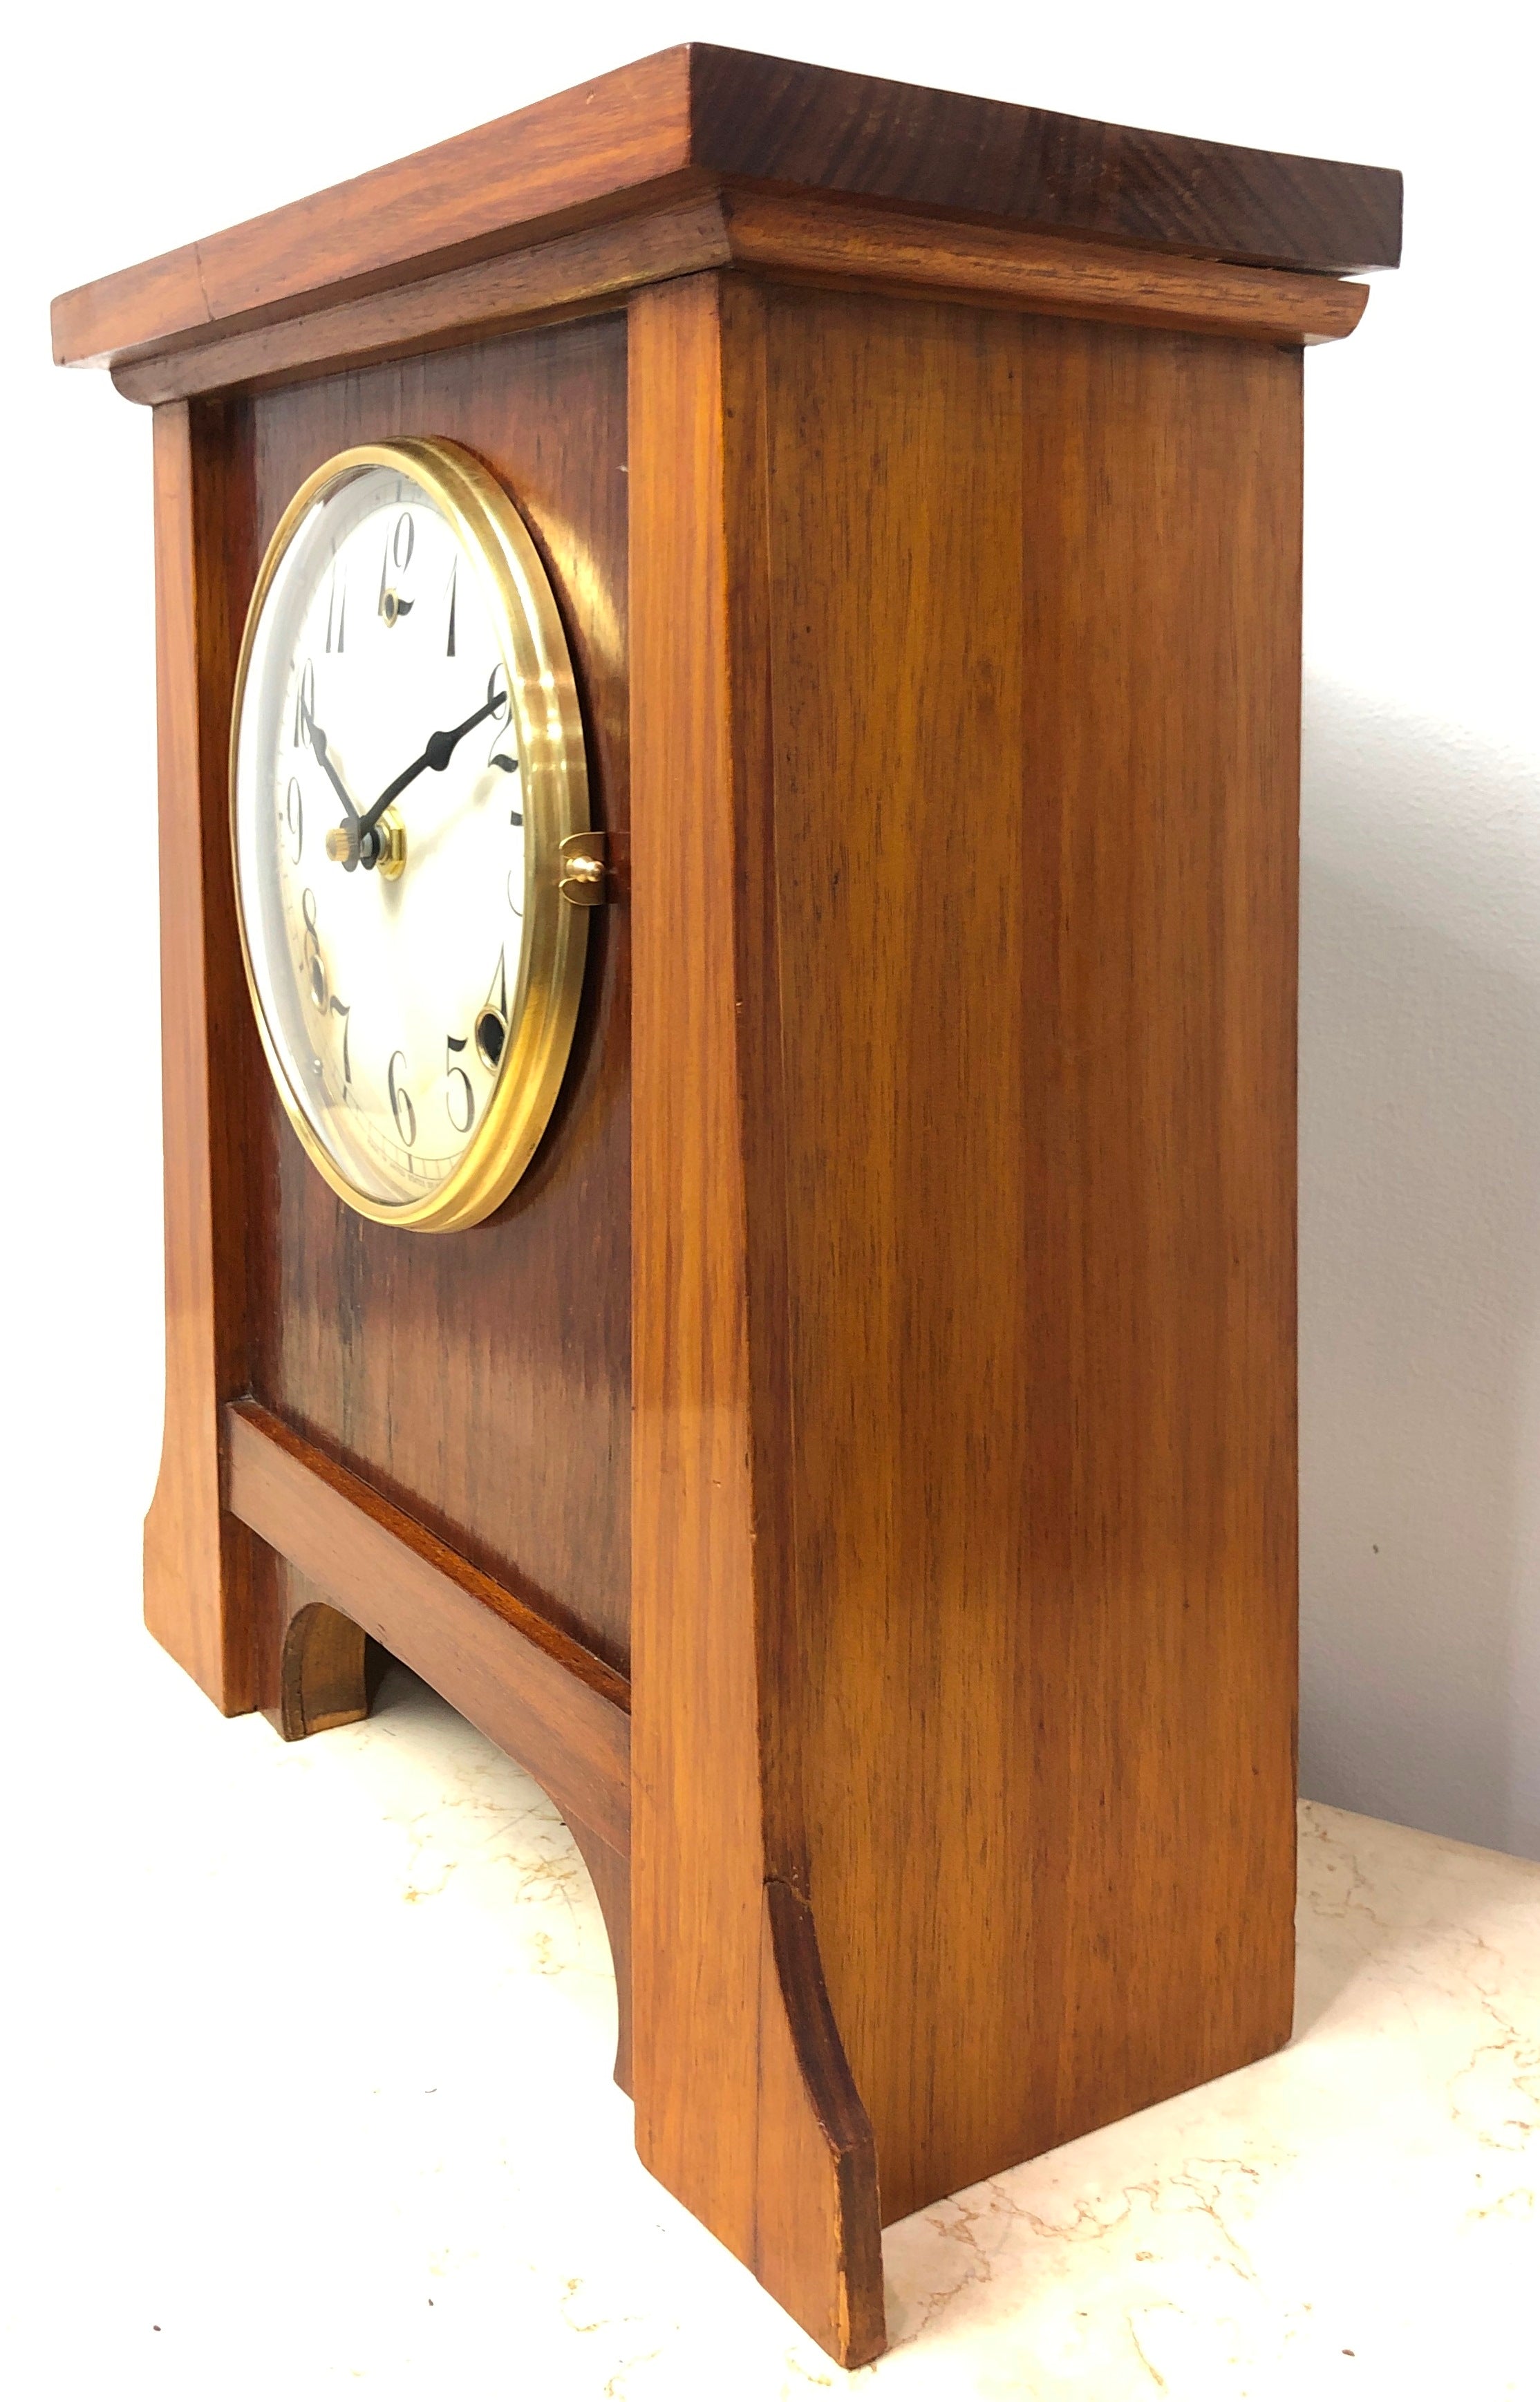 Original Antique USA Battery Mantel Clock | eXibit collection